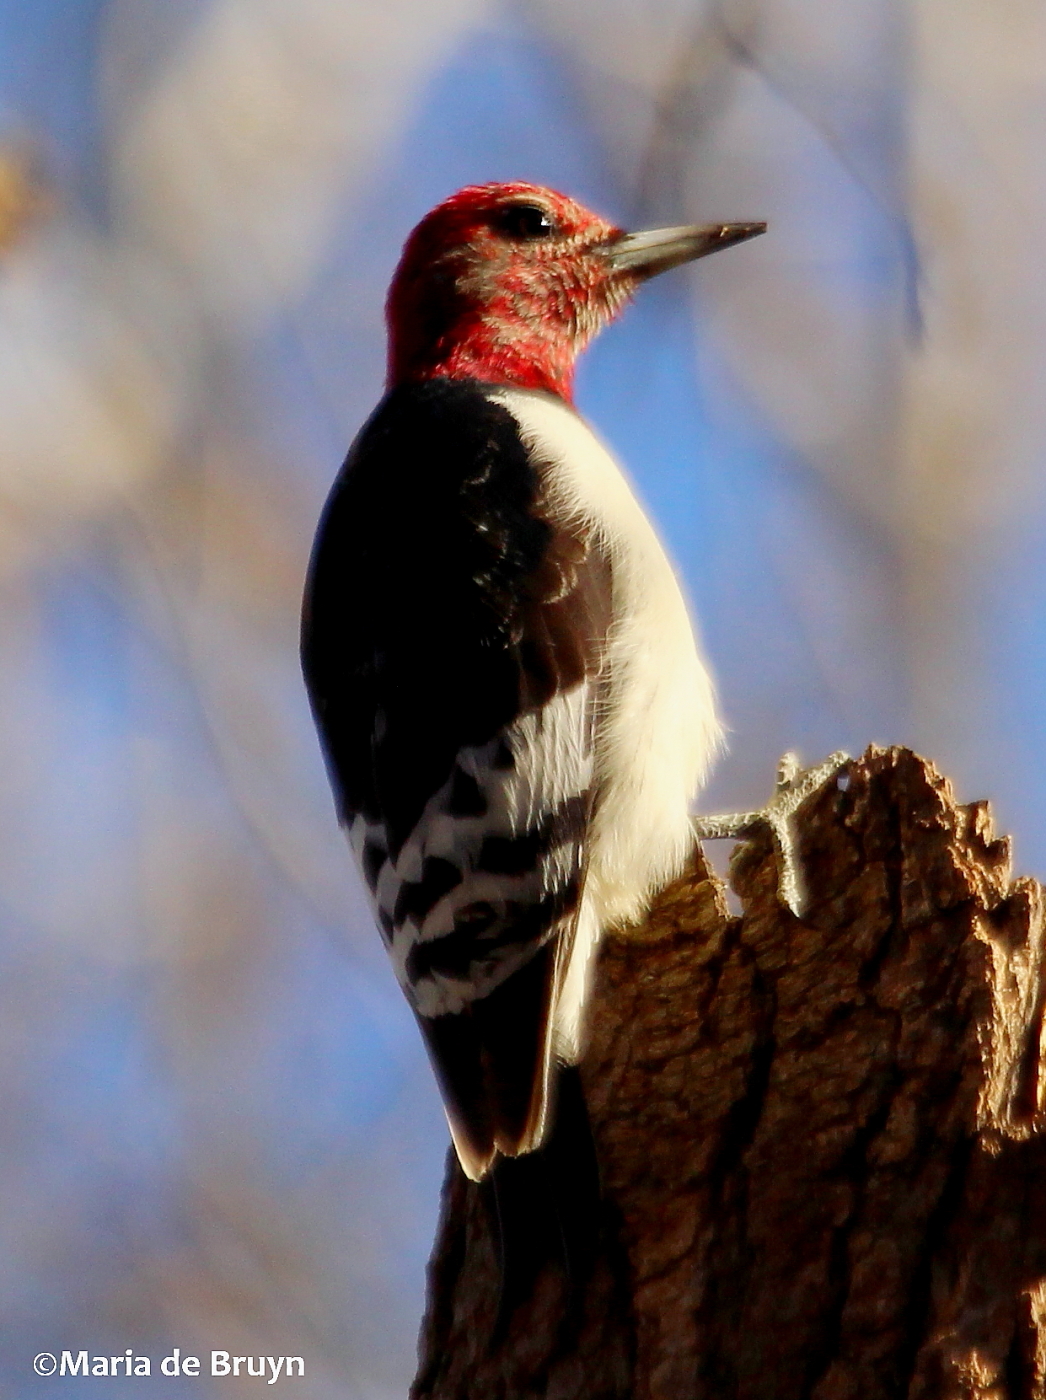 Redhead woodpecker behavior